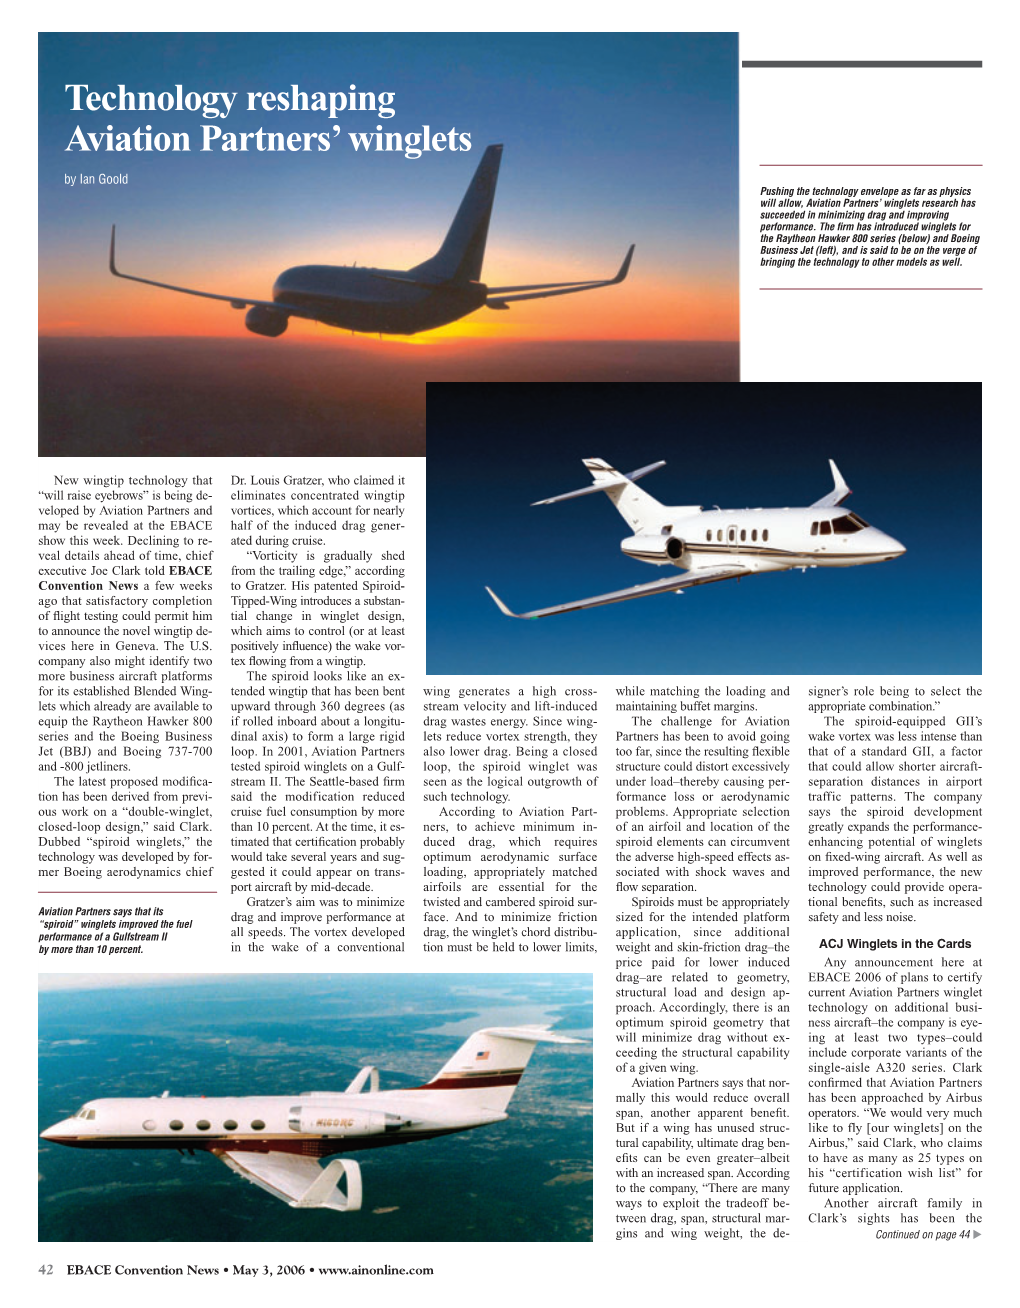 Technology Reshaping Aviation Partners' Winglets